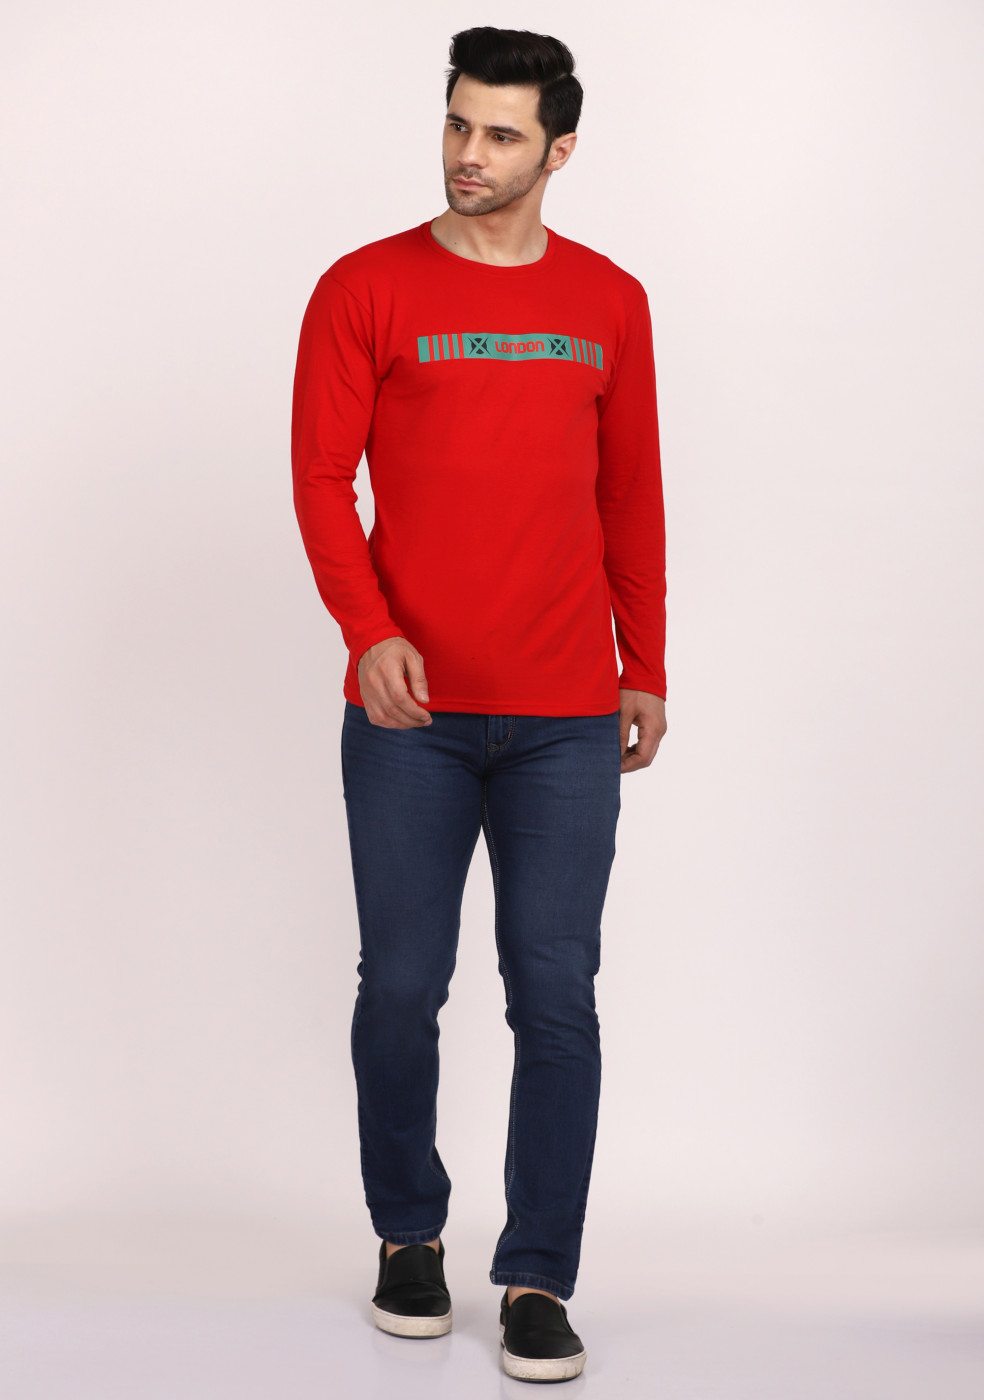 HUKH Red Cotton Lycra T Shirt Full Sleeve Round Neck For Men